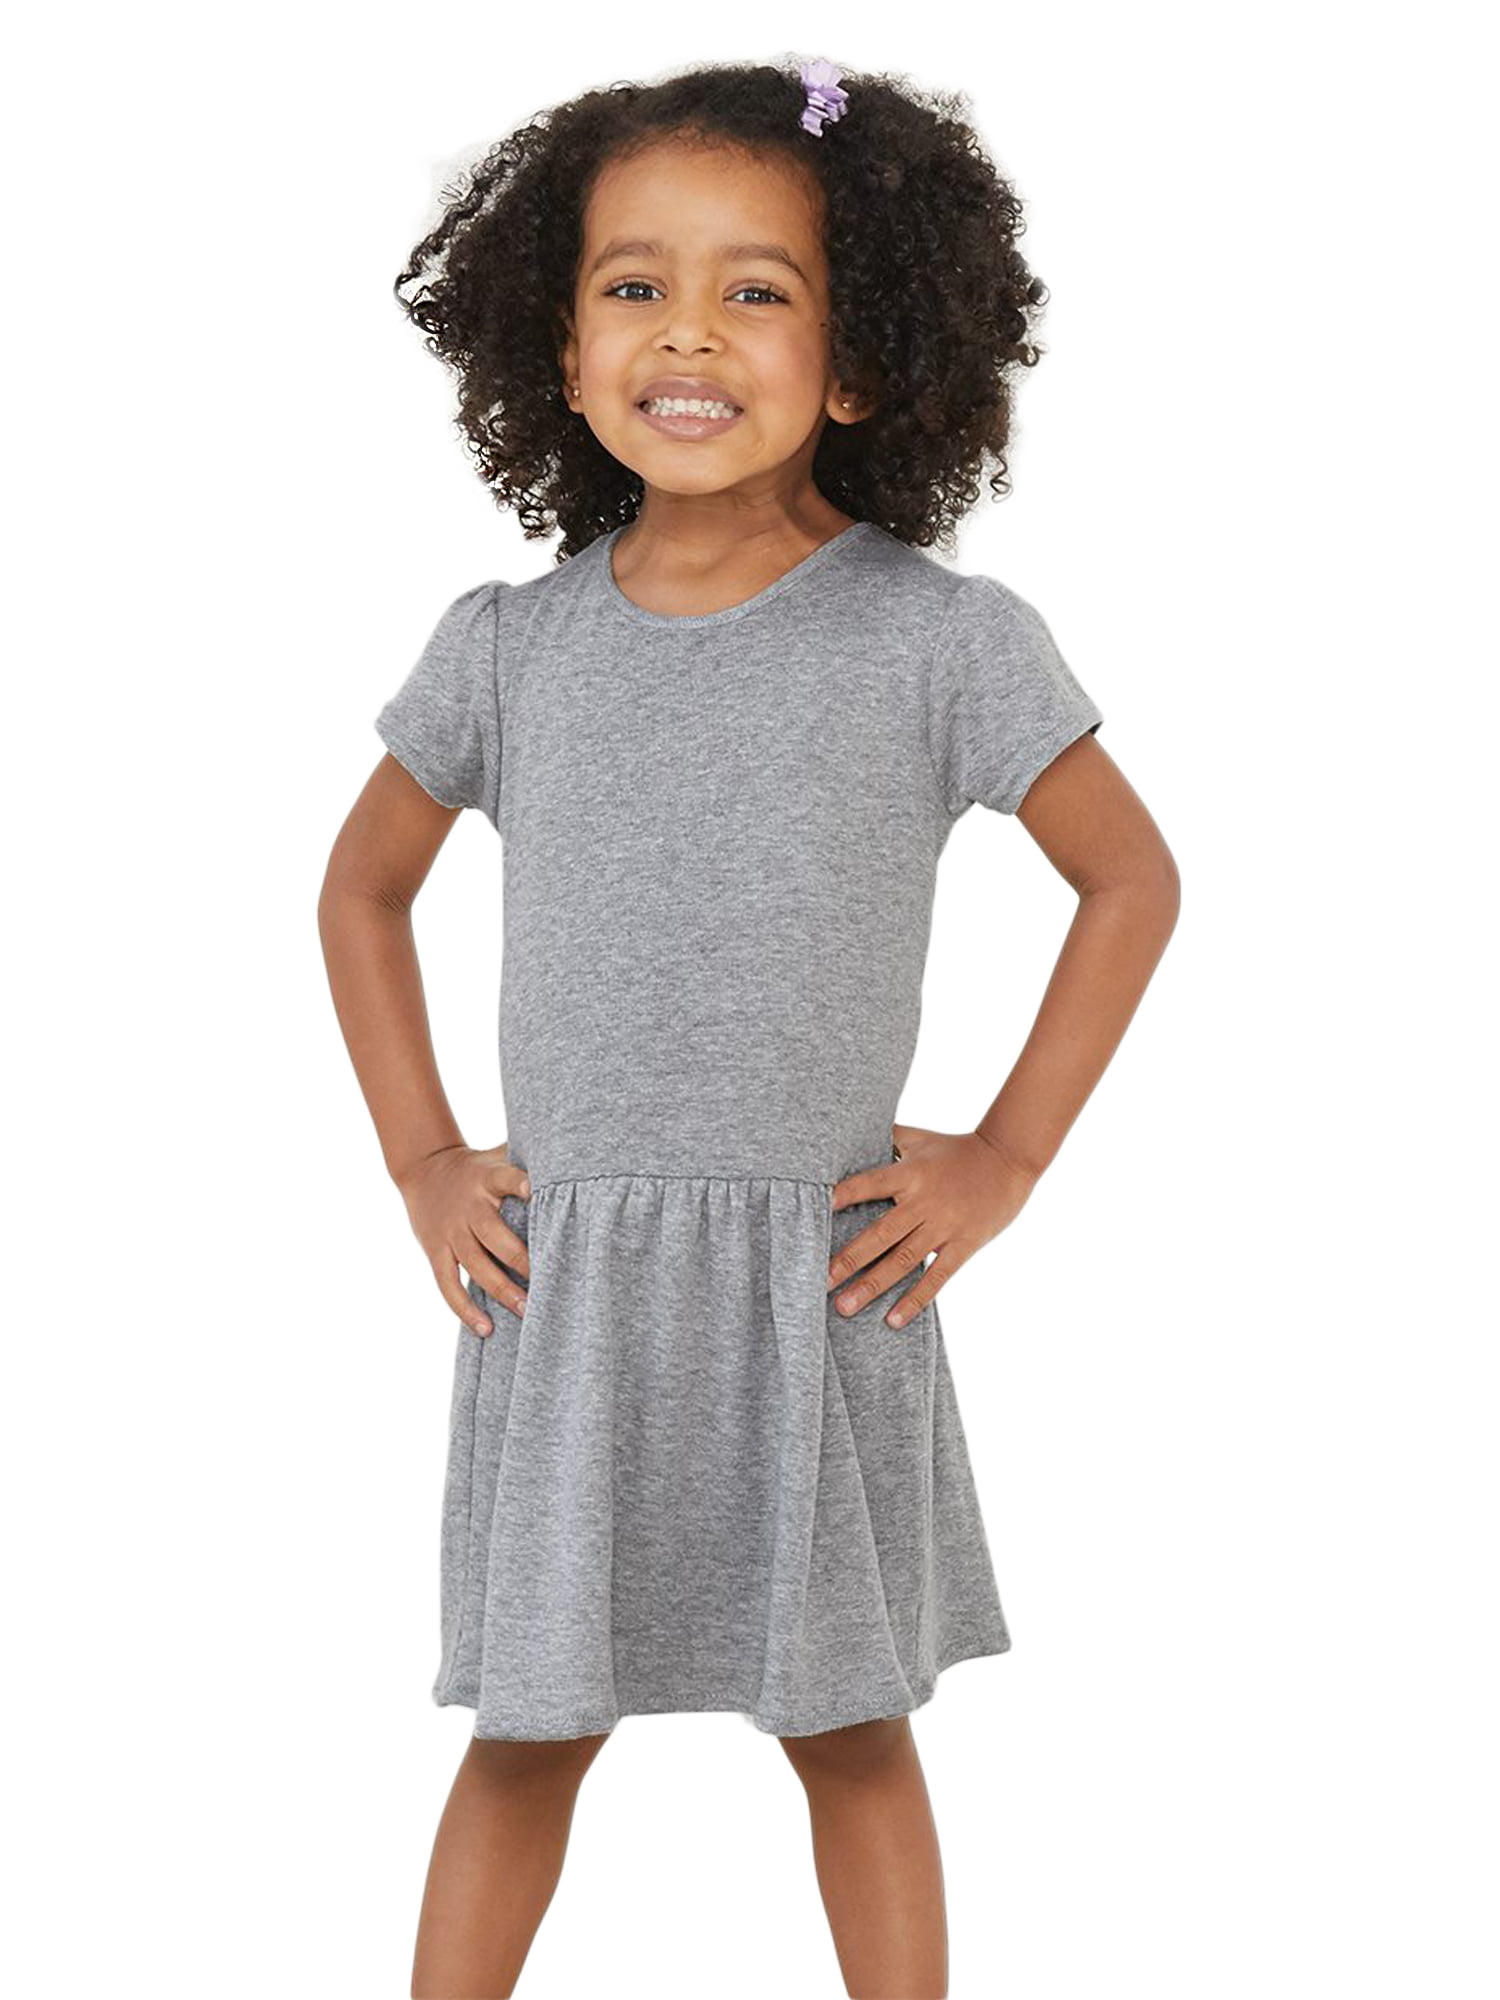 Toddler Baby Kids Girls Dress Girl Outfit Short Sleeve Dresses 2T 3T 4T 5 6 7 